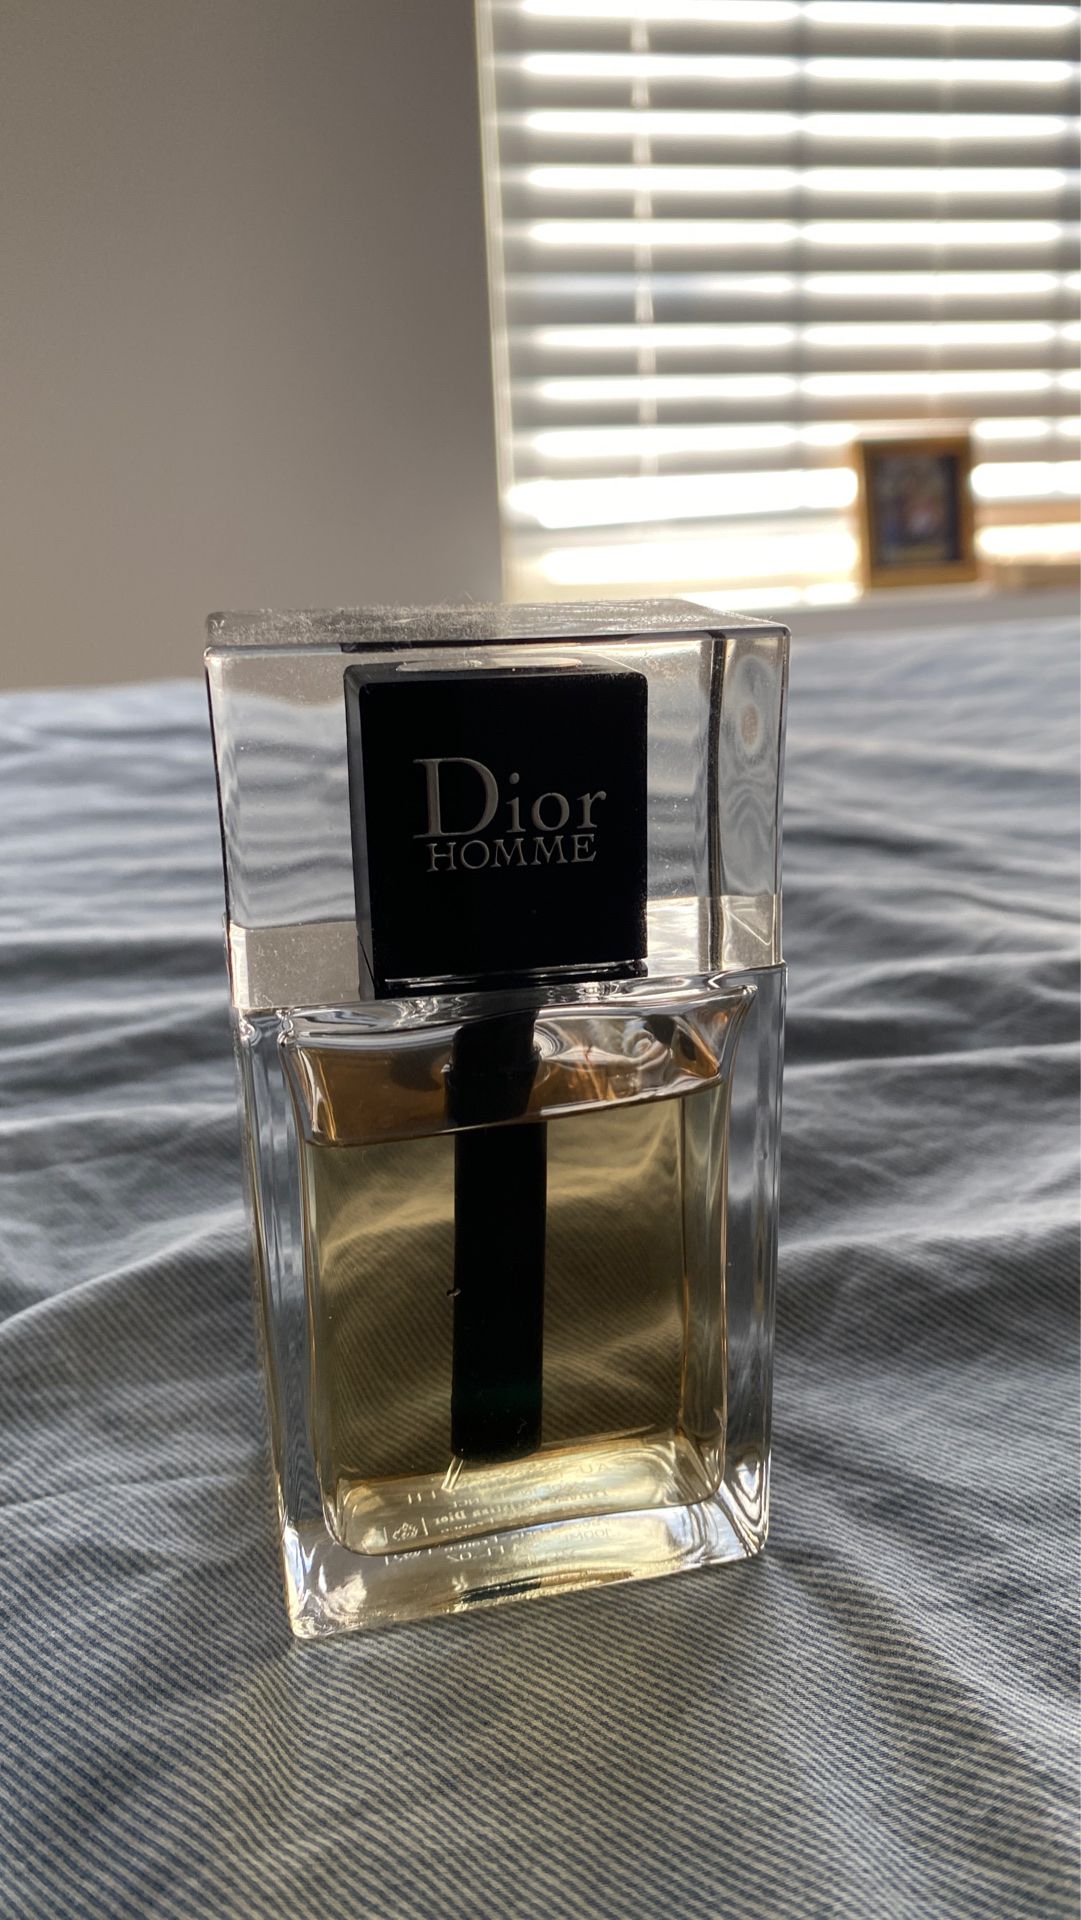 Dior Homme (Parfum) ORIGINAL